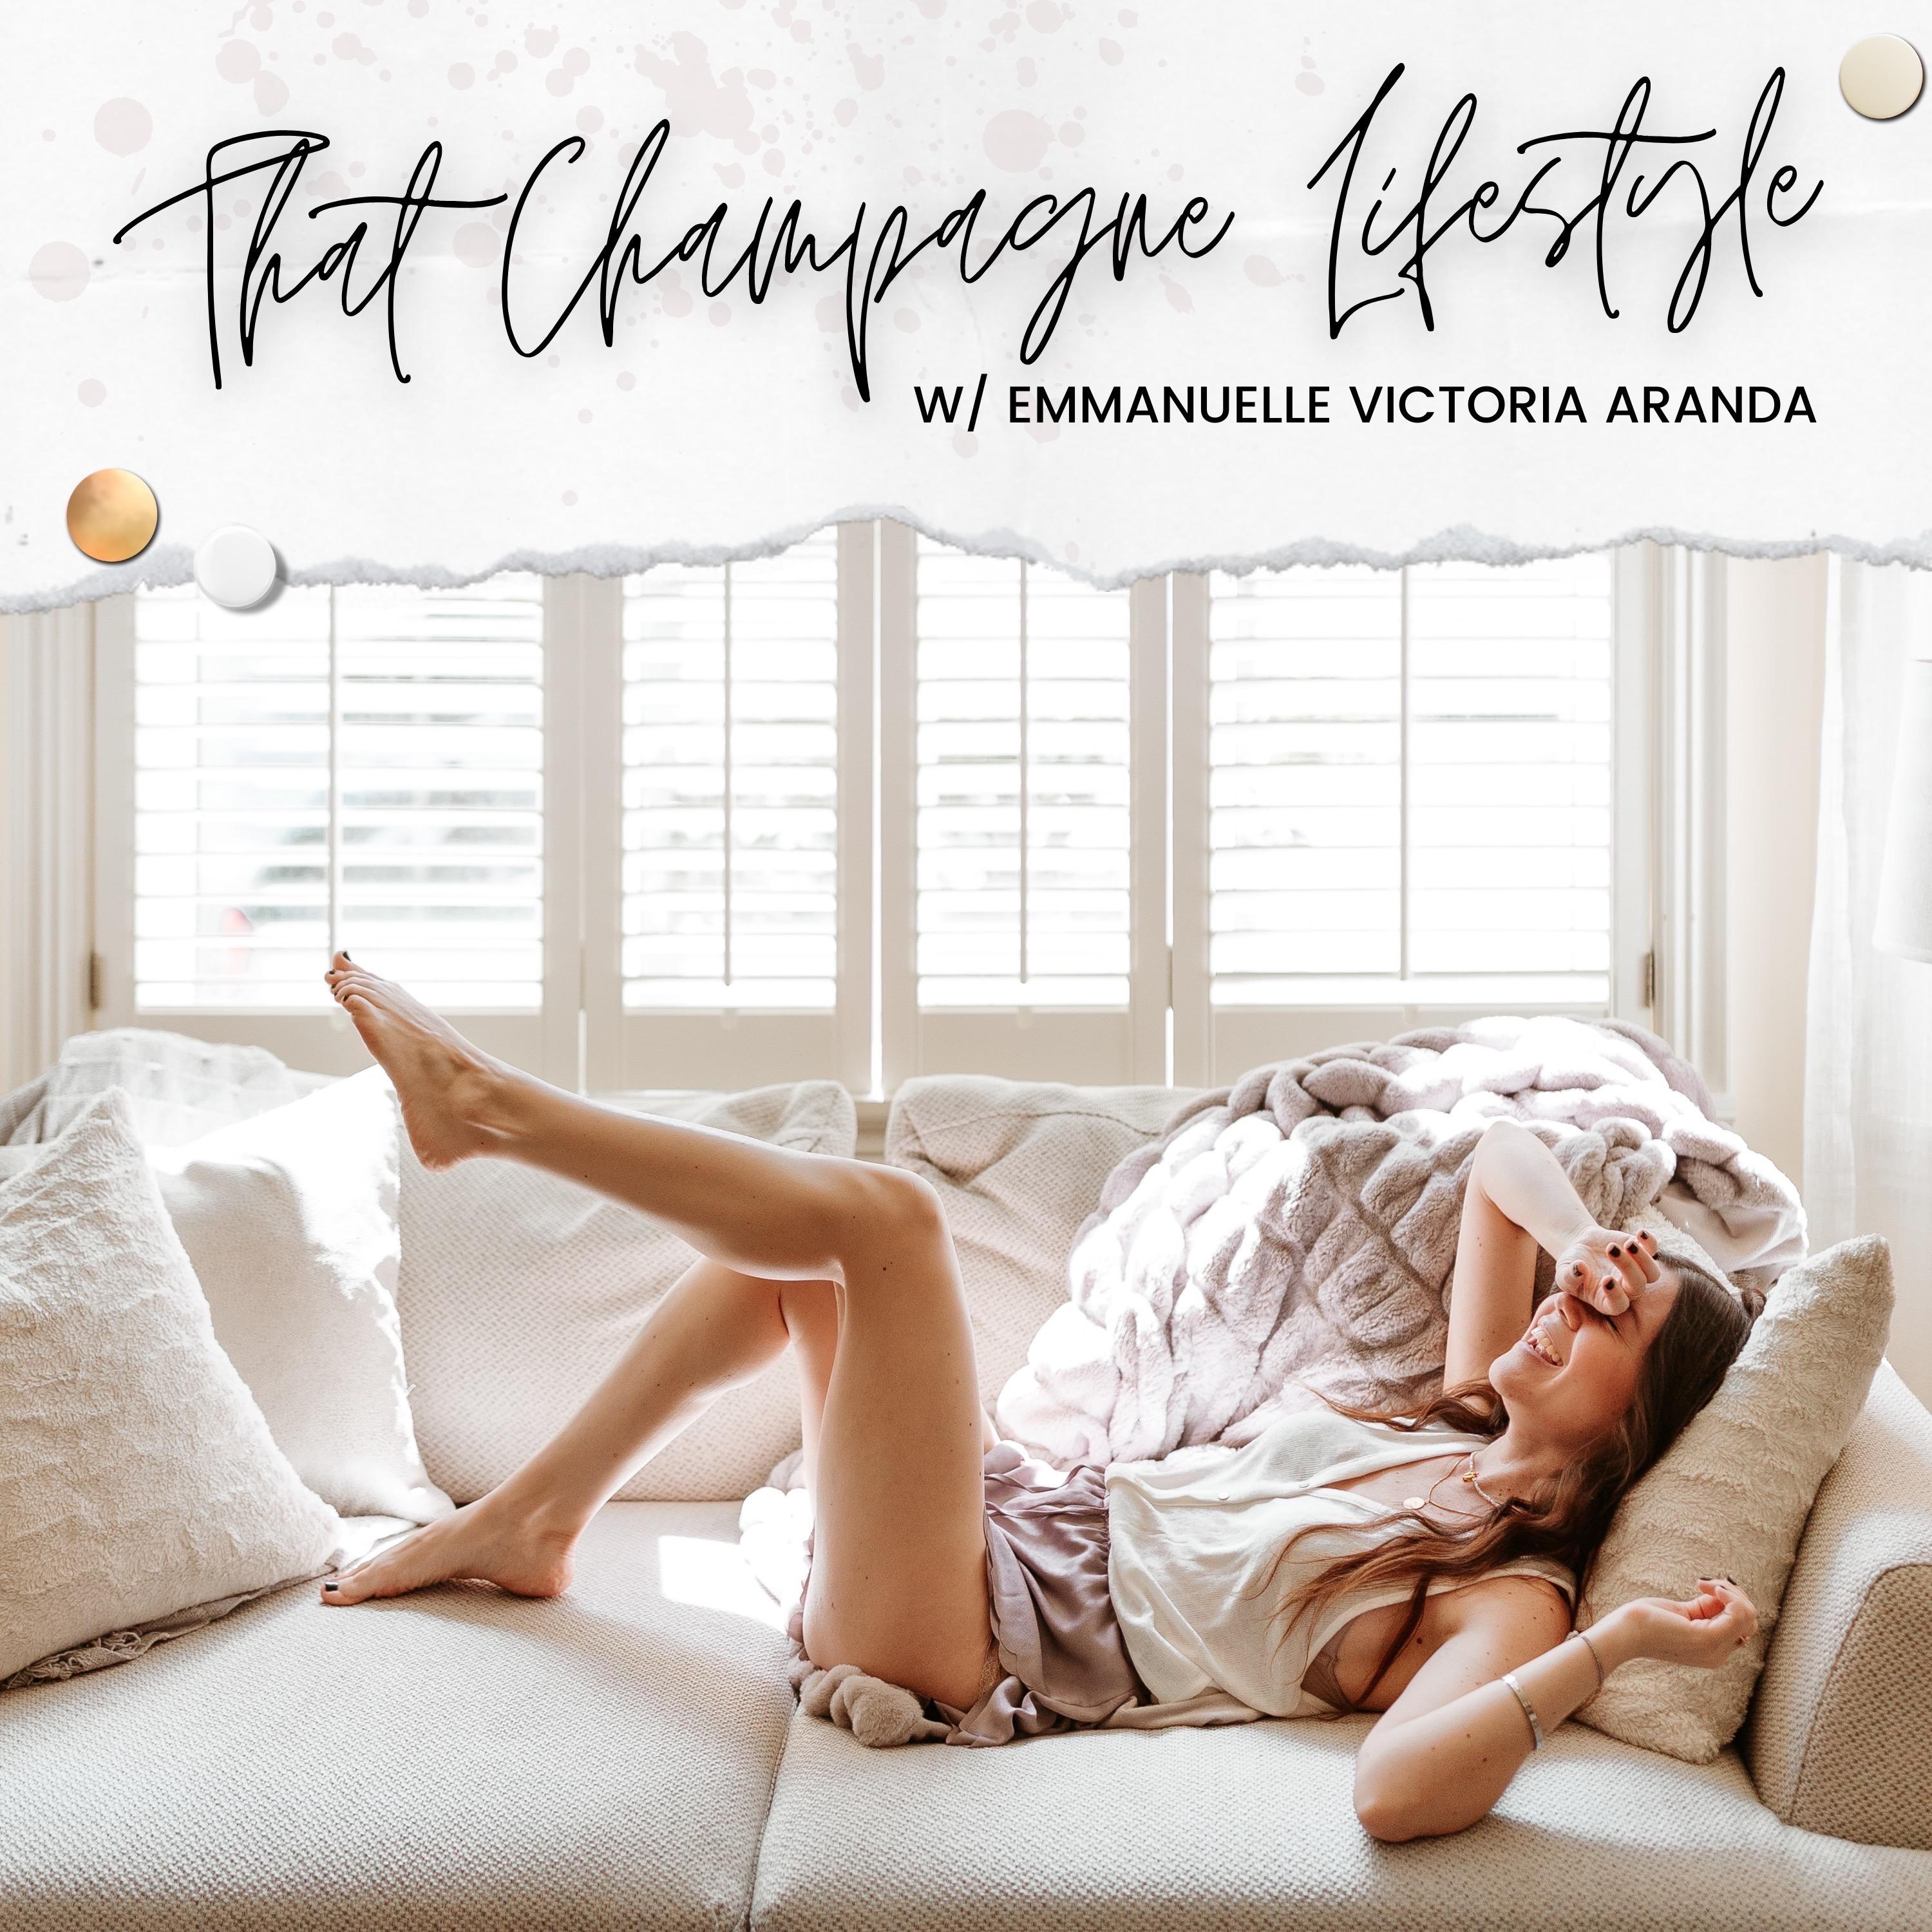 That Champagne Lifestyle With Emmanuelle Victoria Aranda